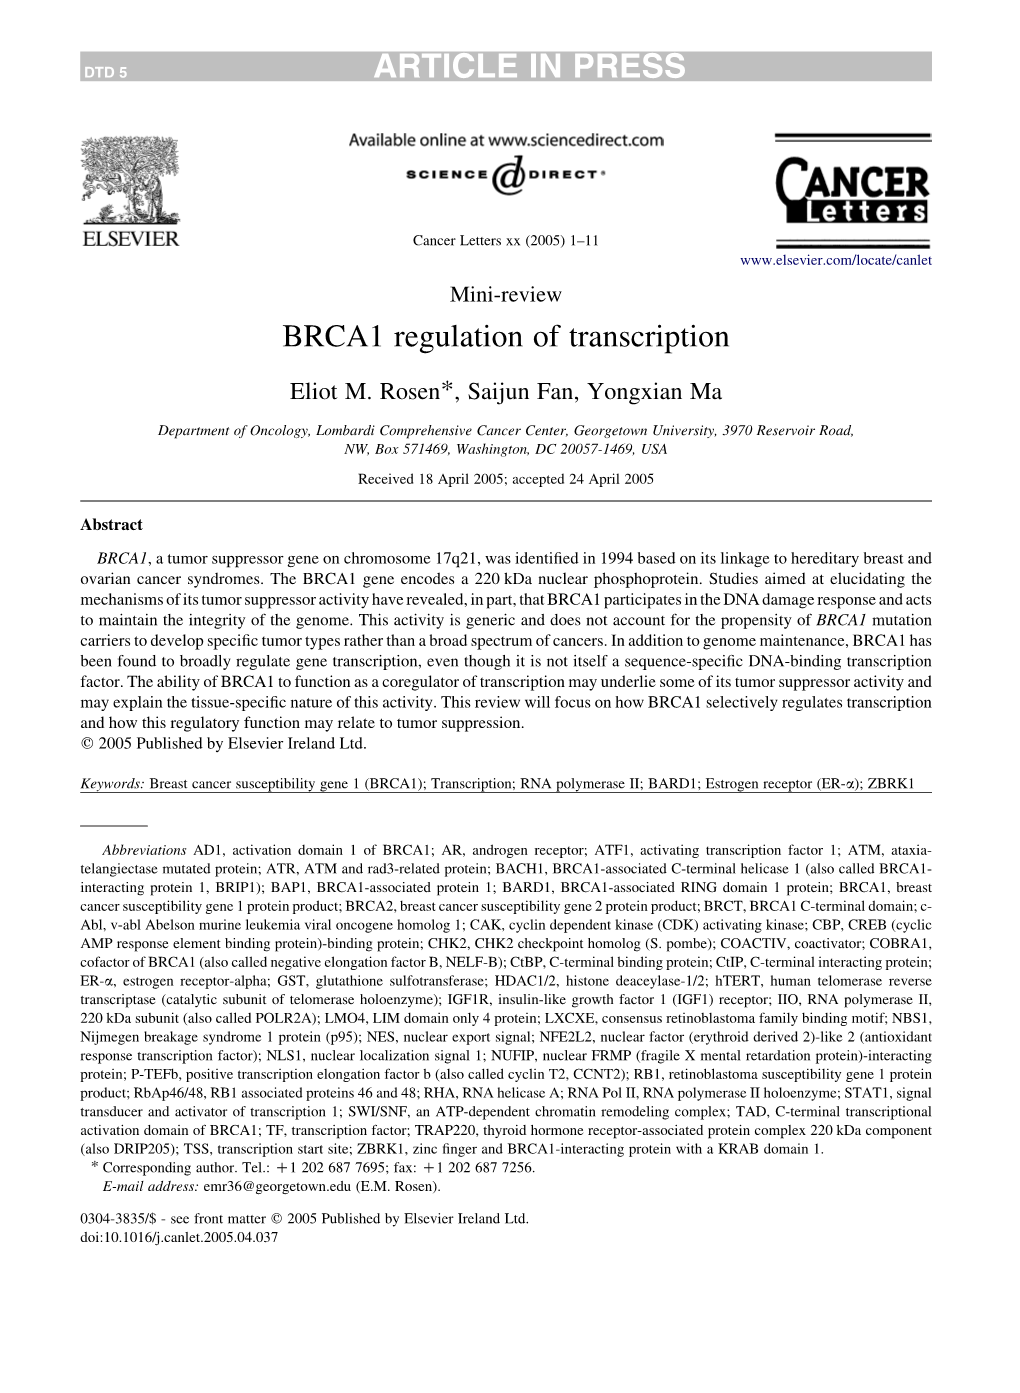 BRCA1 Regulation of Transcription